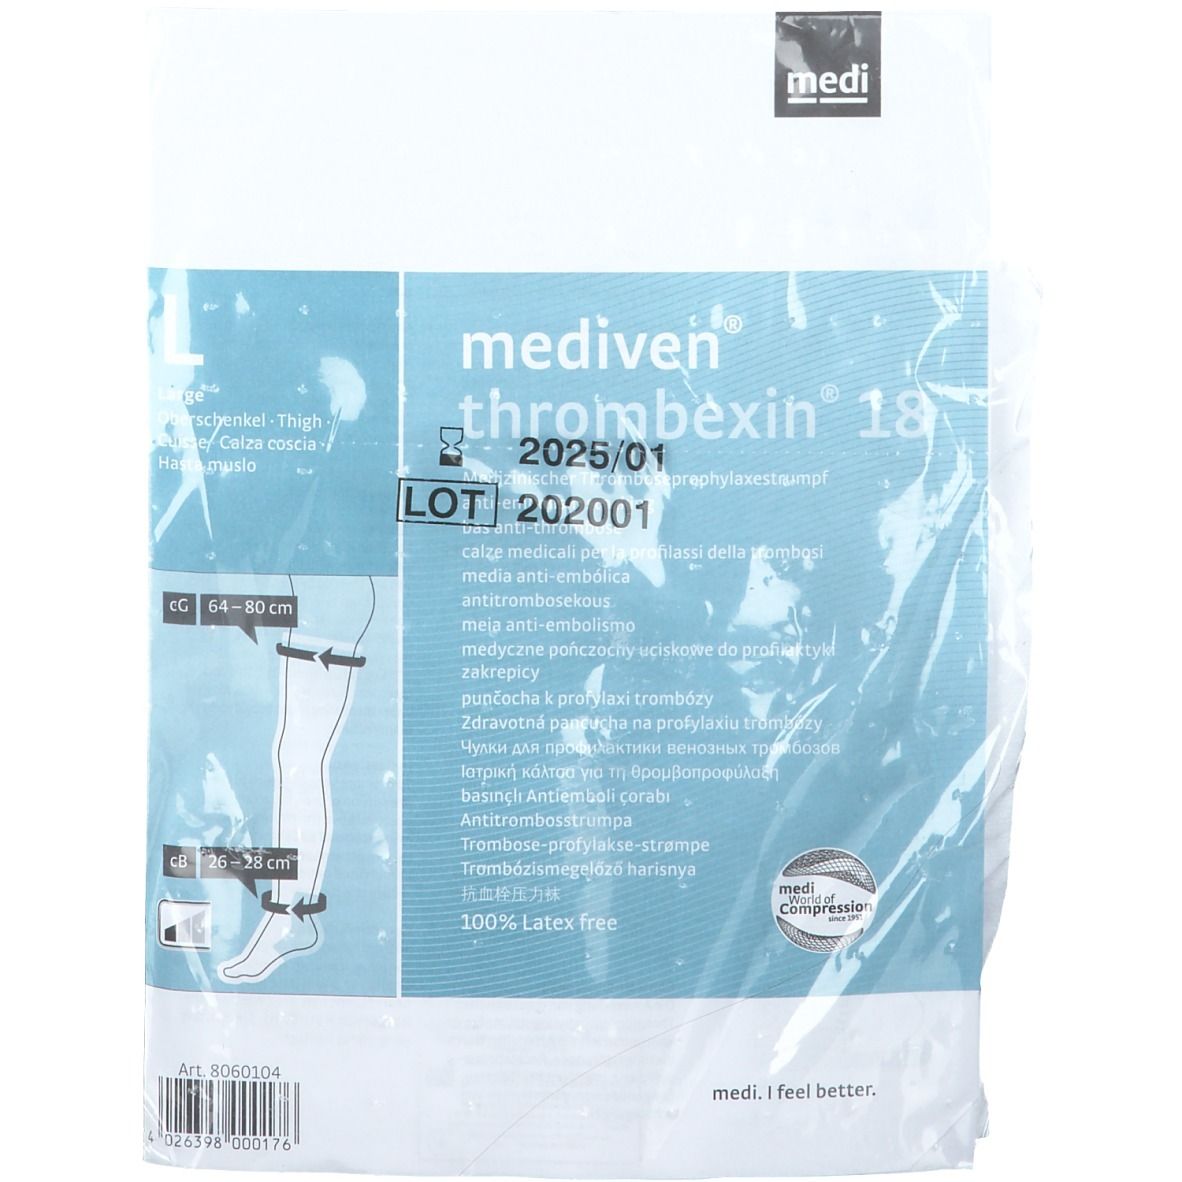 MEDI BELGIUM mediven® thrombexin® 18